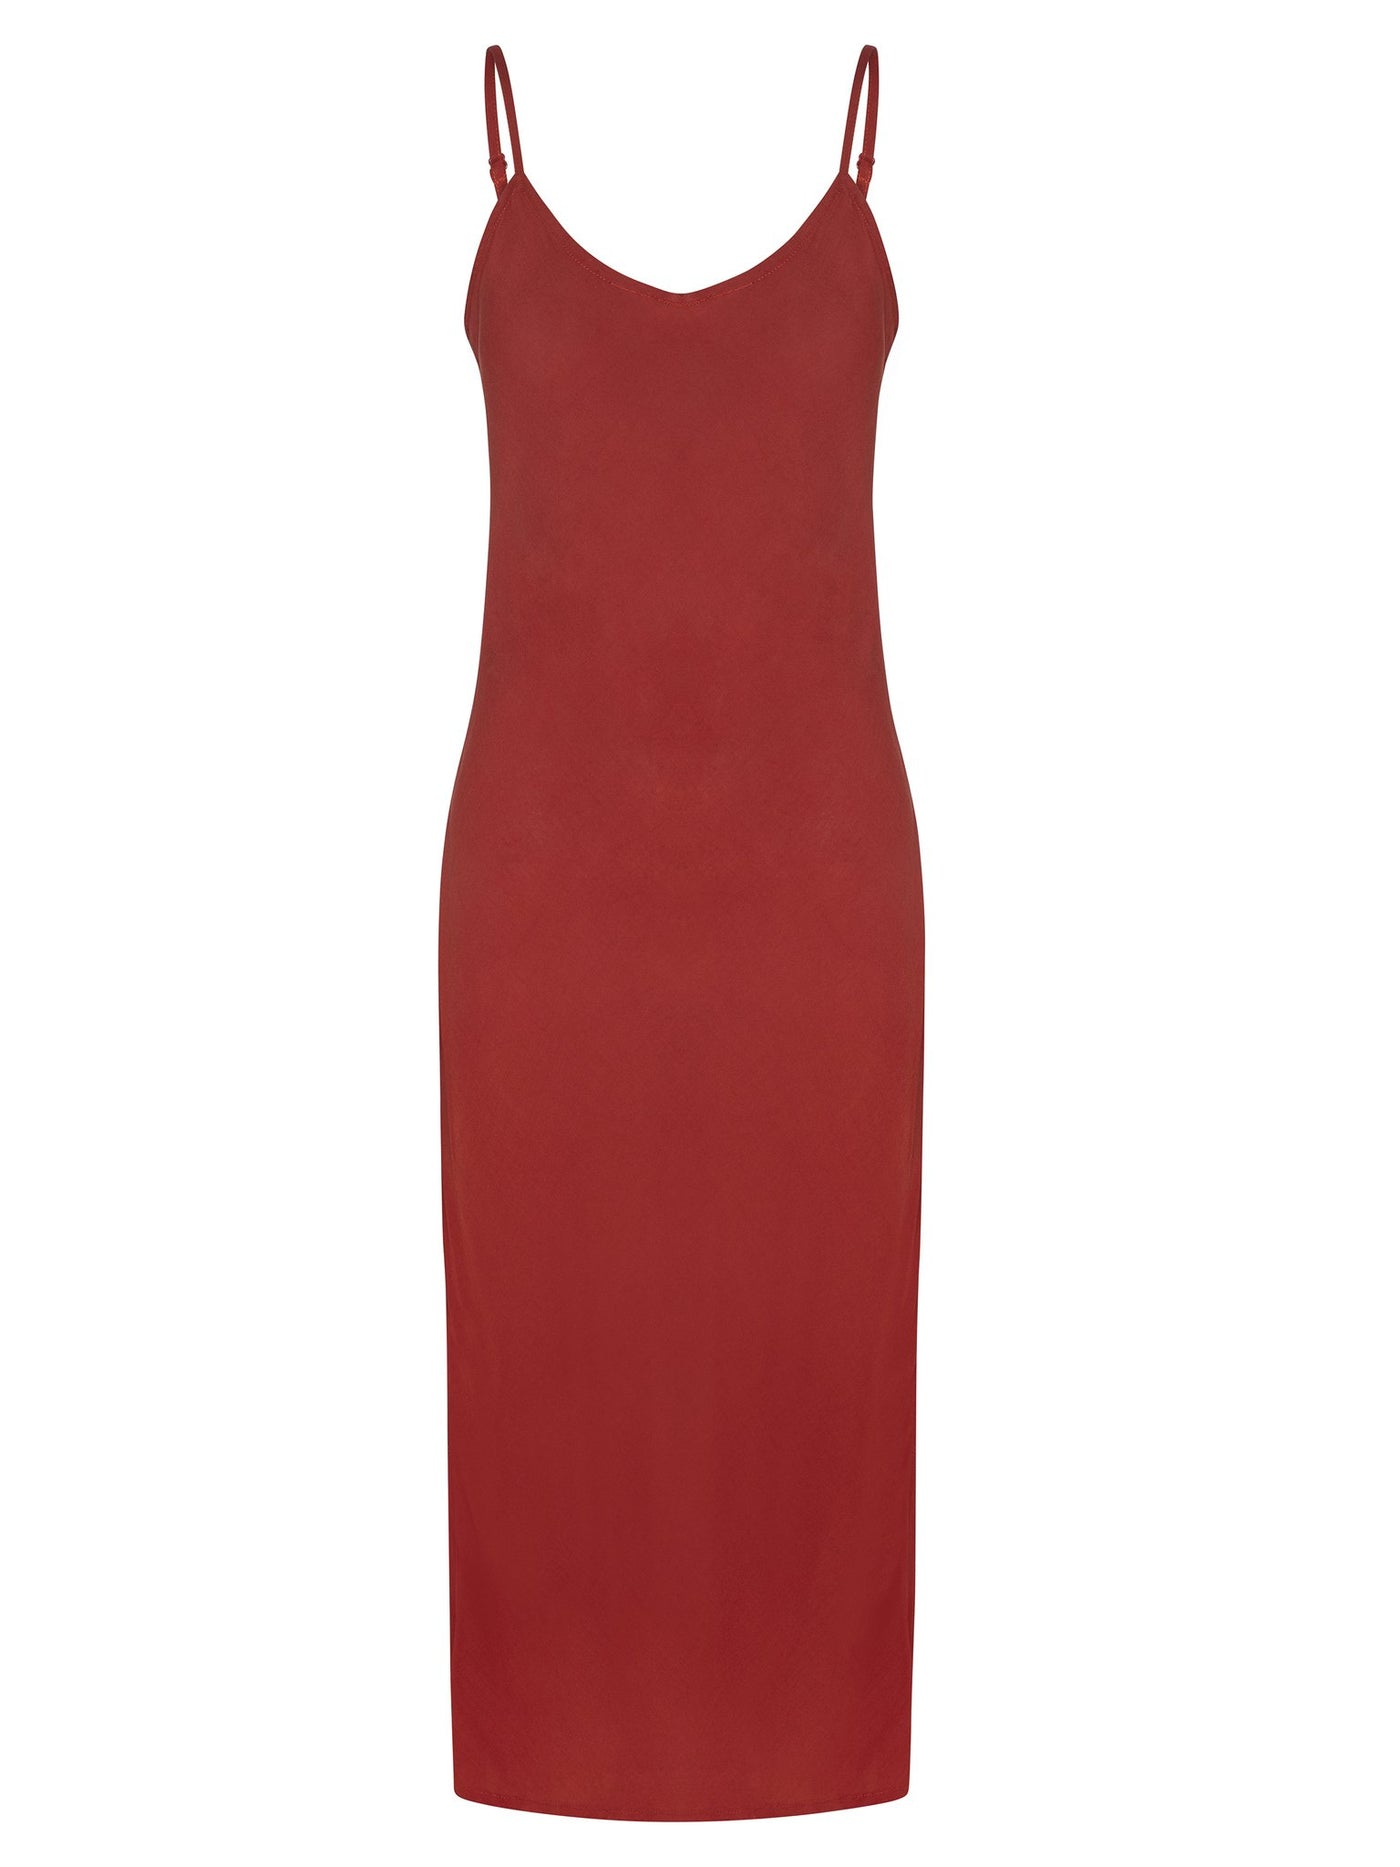 Brick Bias Cut slip dress, Midi Length, Adjustable Straps, Side Splits (5cm), 100% rayon, designed in Australia